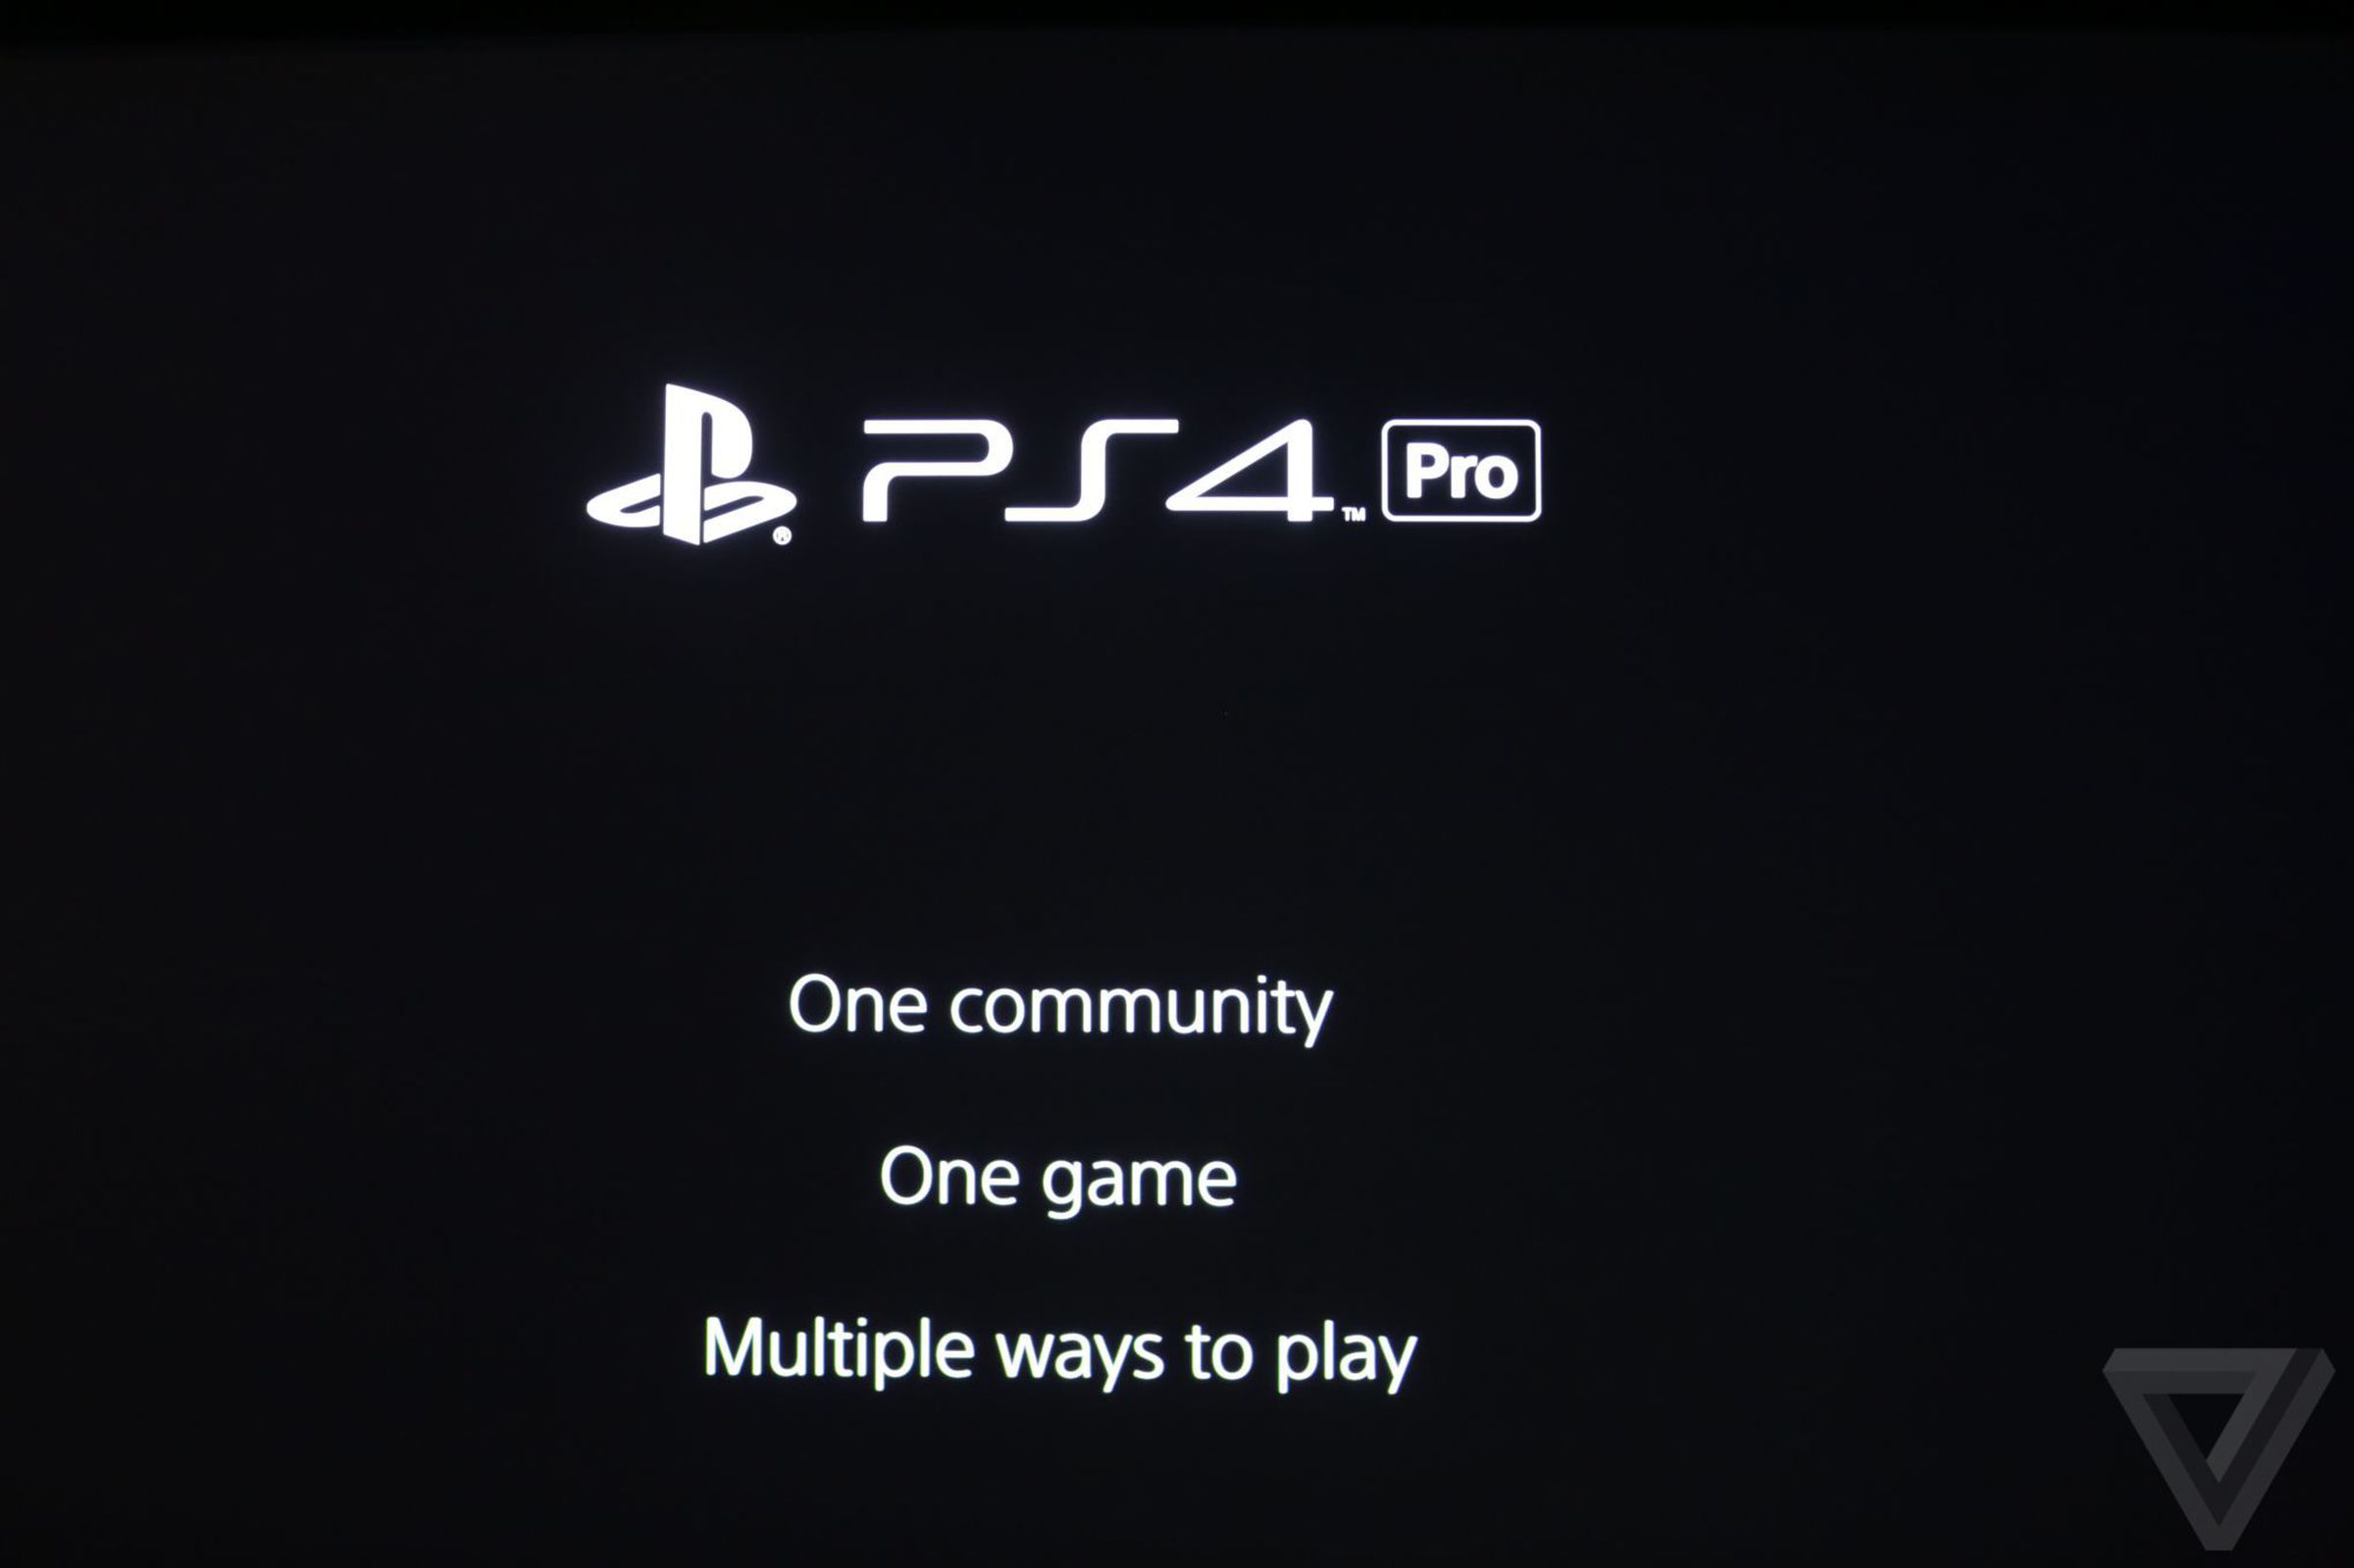 Playstation 4 Pro Announcement photos